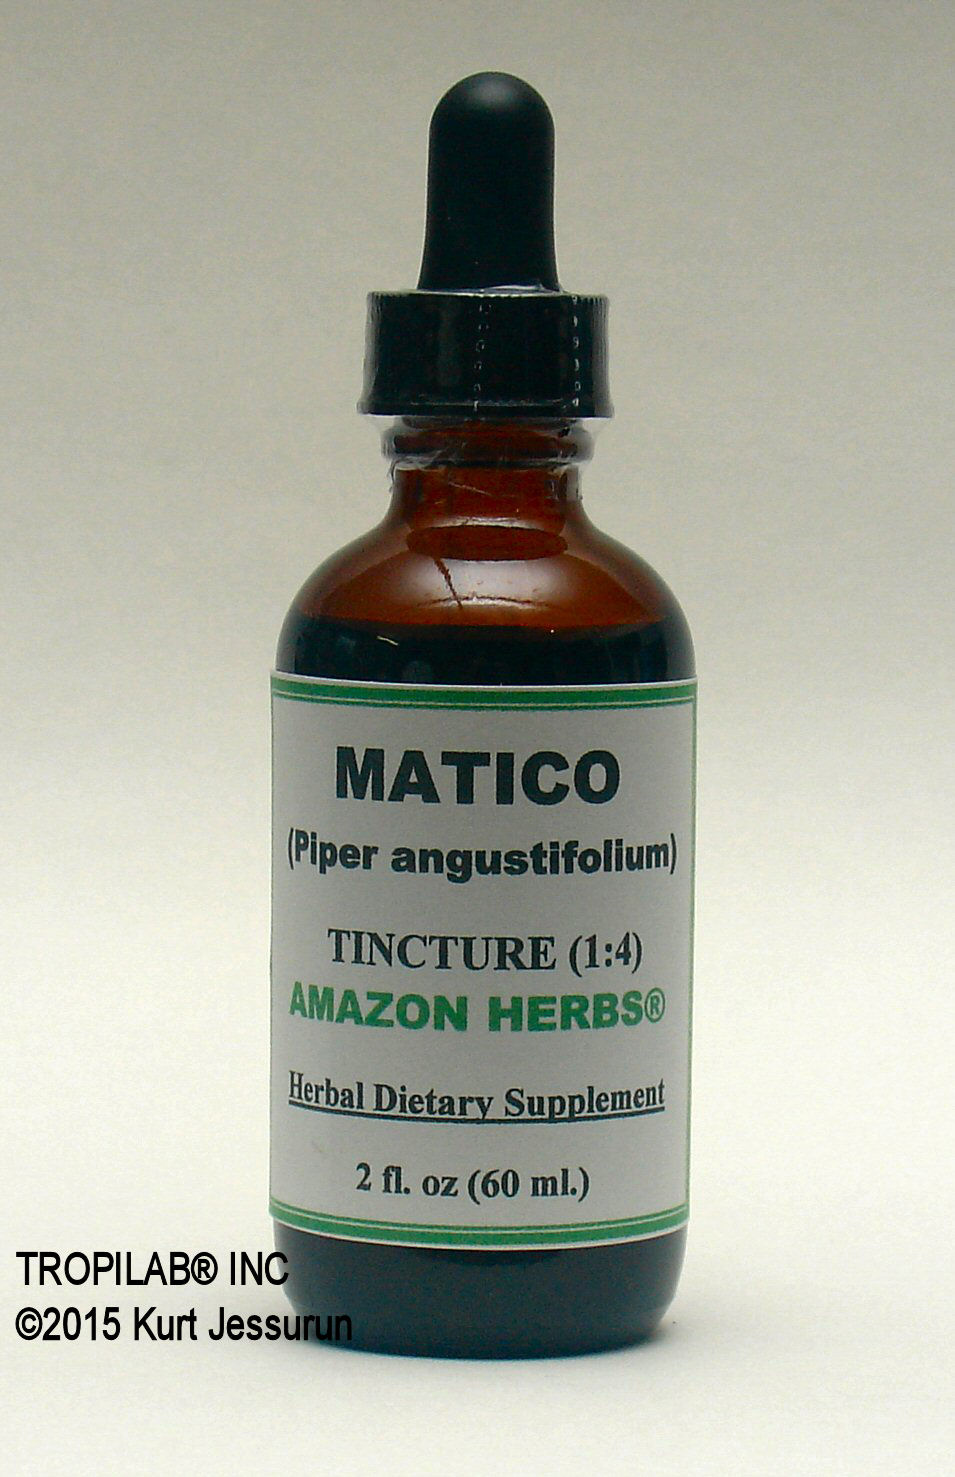 Piper angustifolium - Spiked pepper